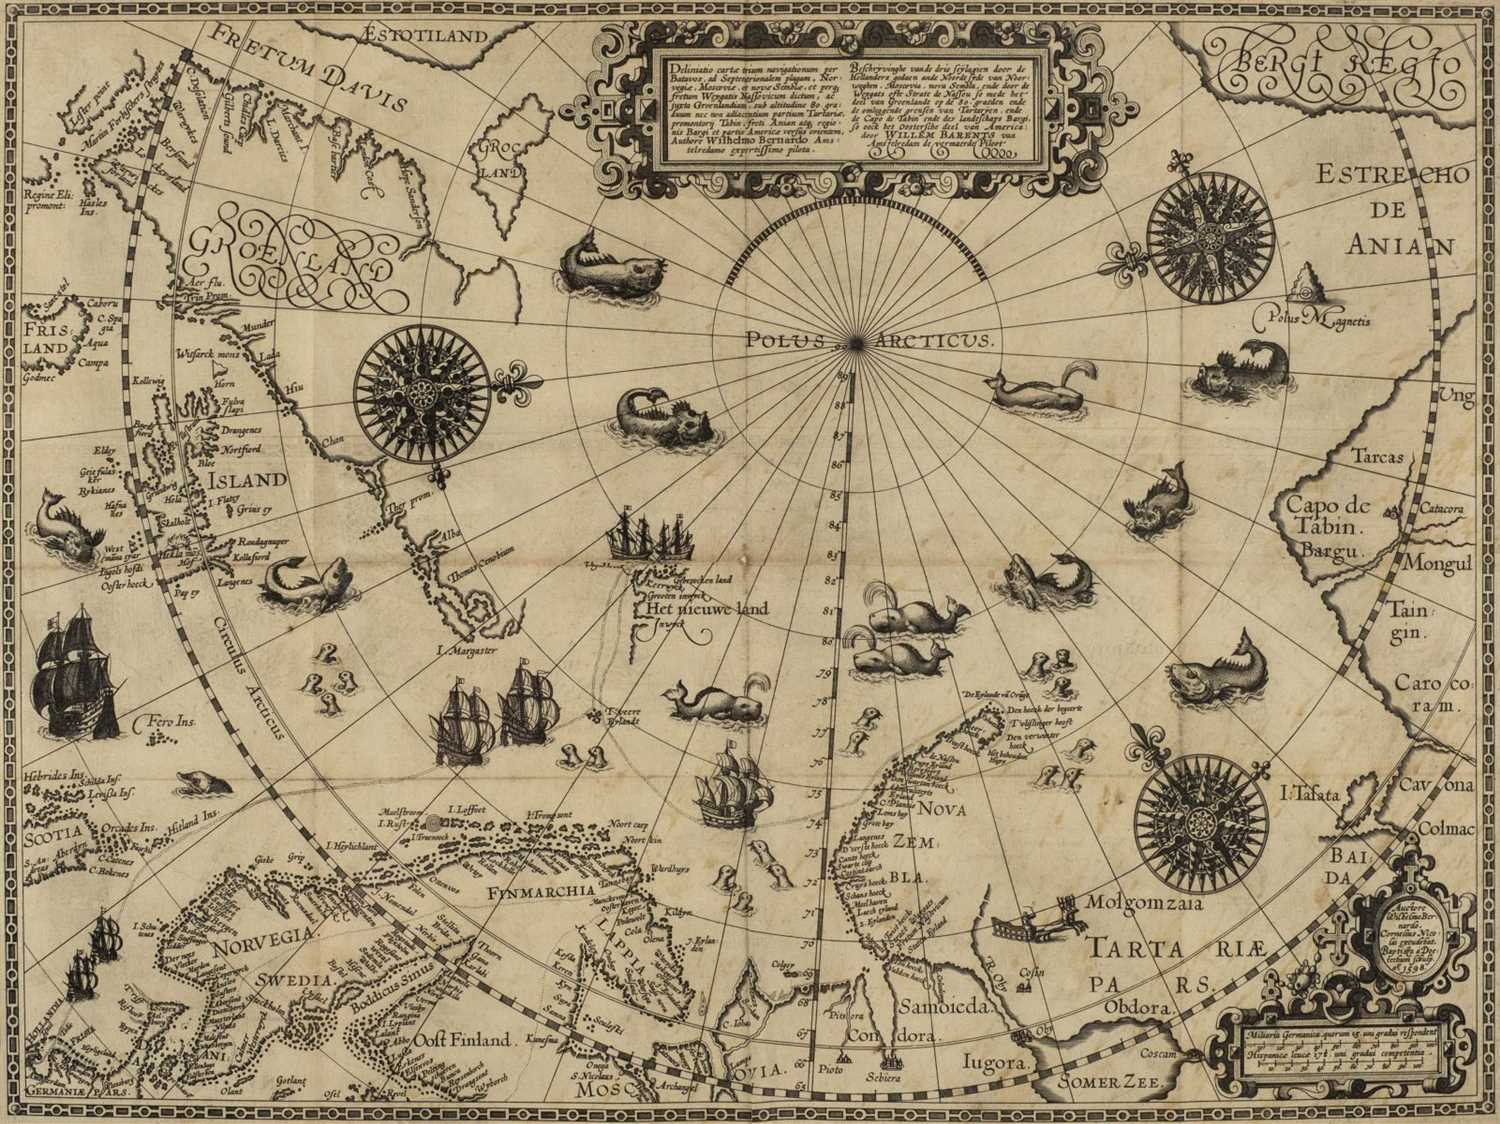 43 - Linschoten (Jan Huyghen van). Navigatio ac itinerarium in orientalem, 1st edition in Latin, 1599